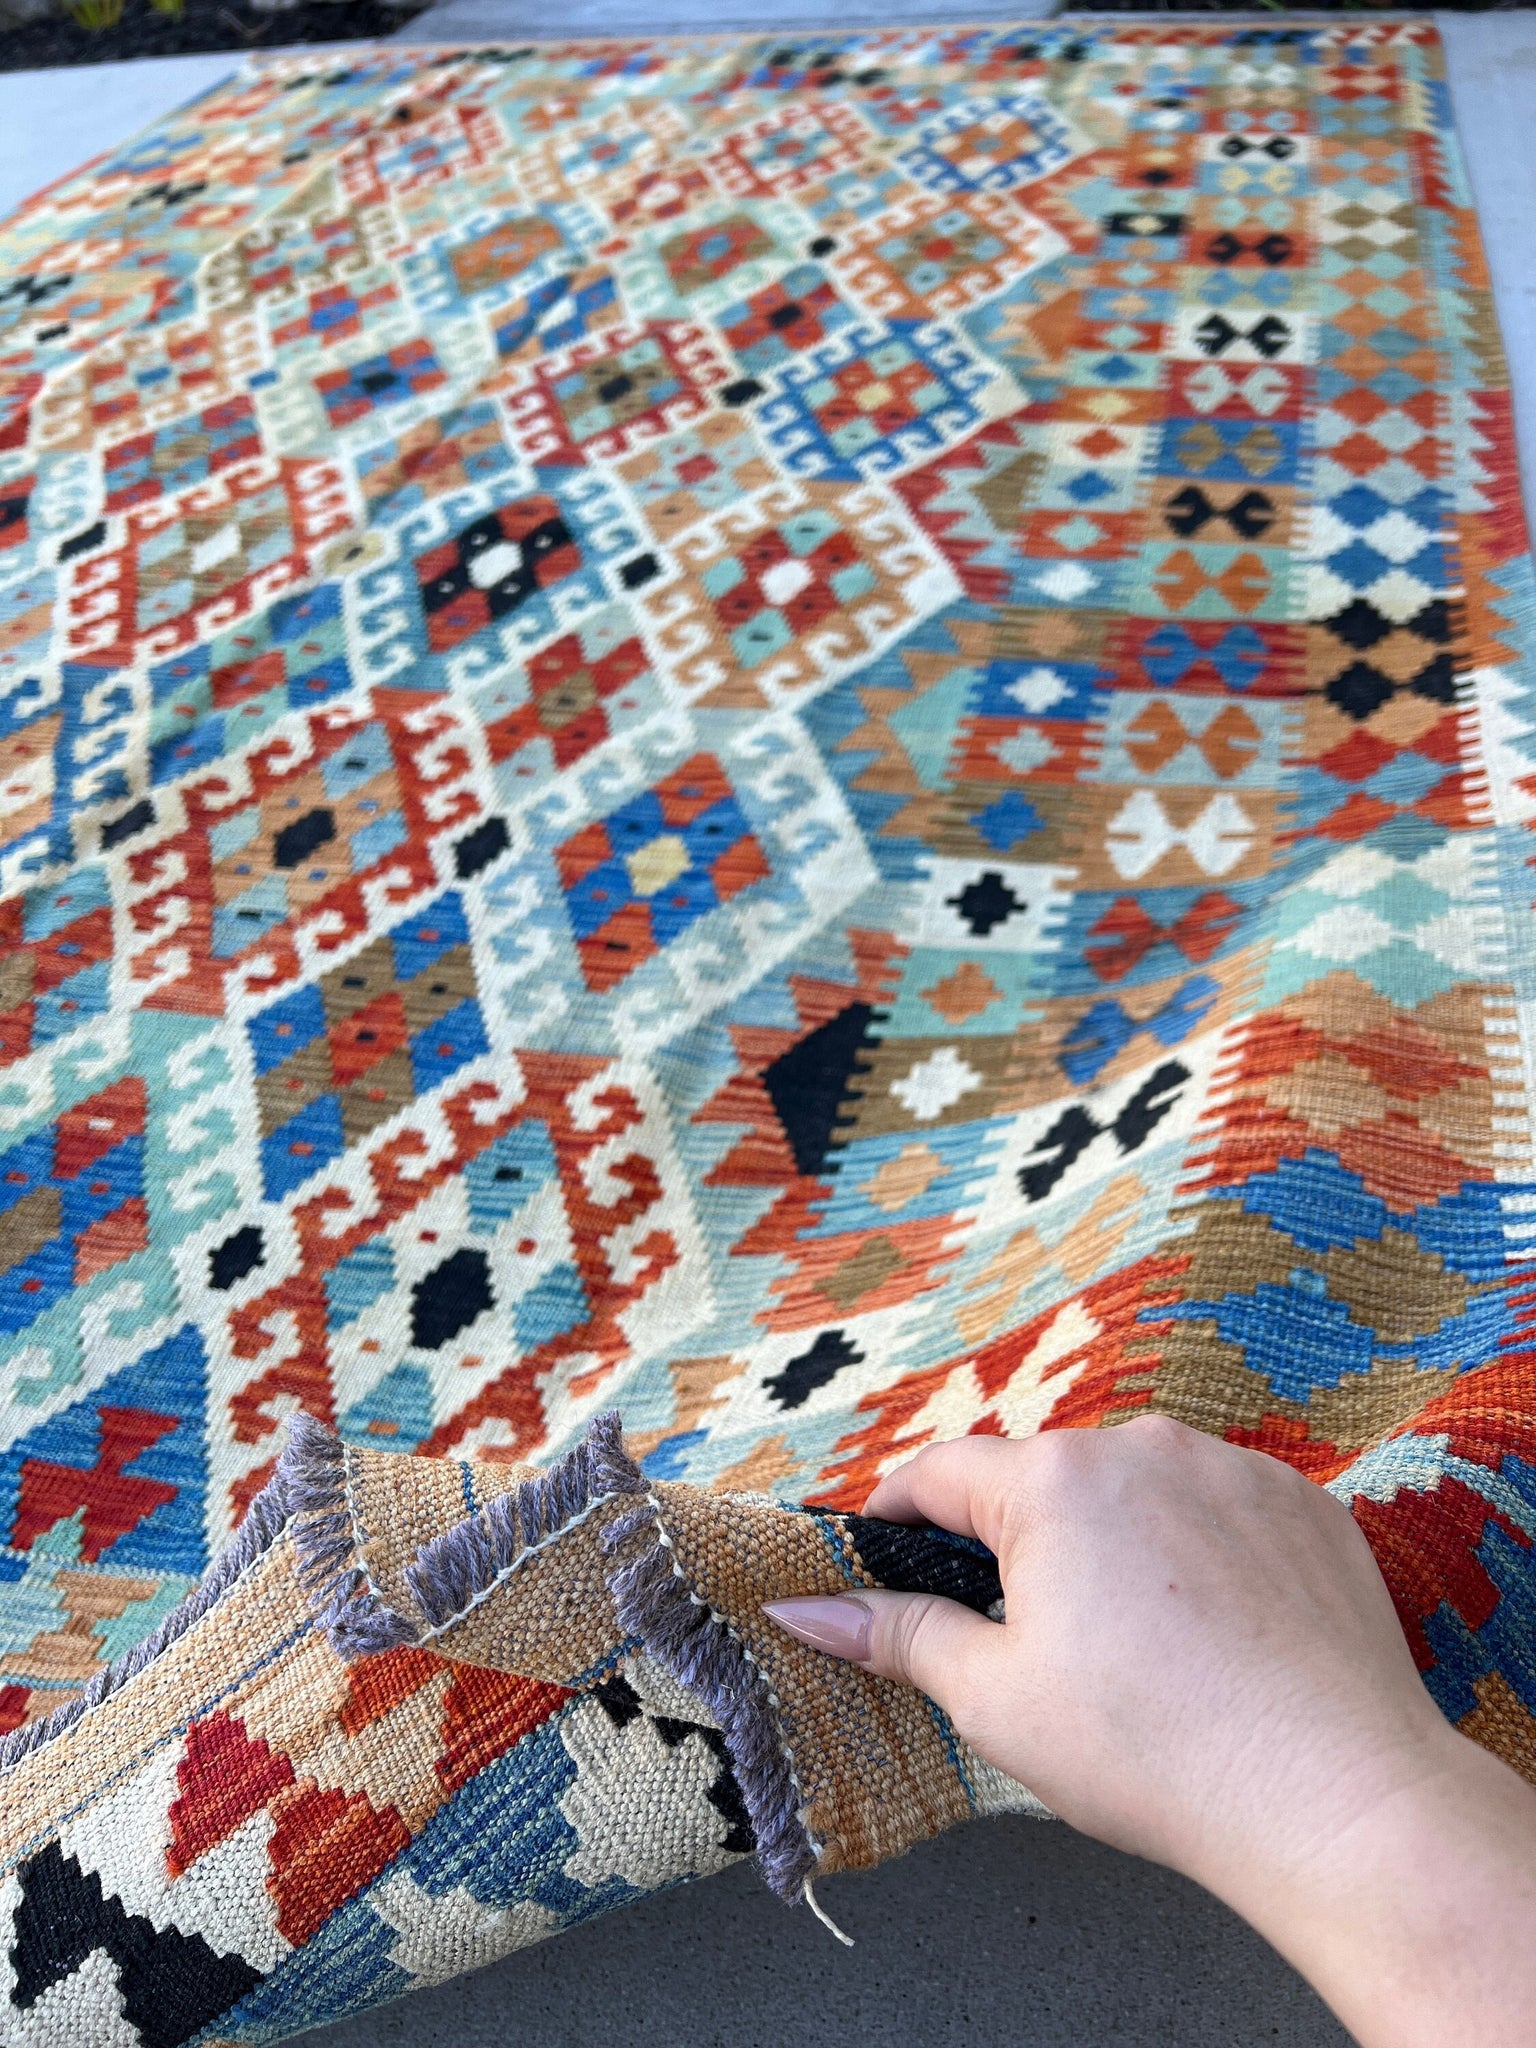 7x10 (215x305) Handmade Afghan Kilim Rug | Copper Brown Blue Teal Black White Orange | Wool Tribal Turkish Moroccan Oriental Persian Oushak